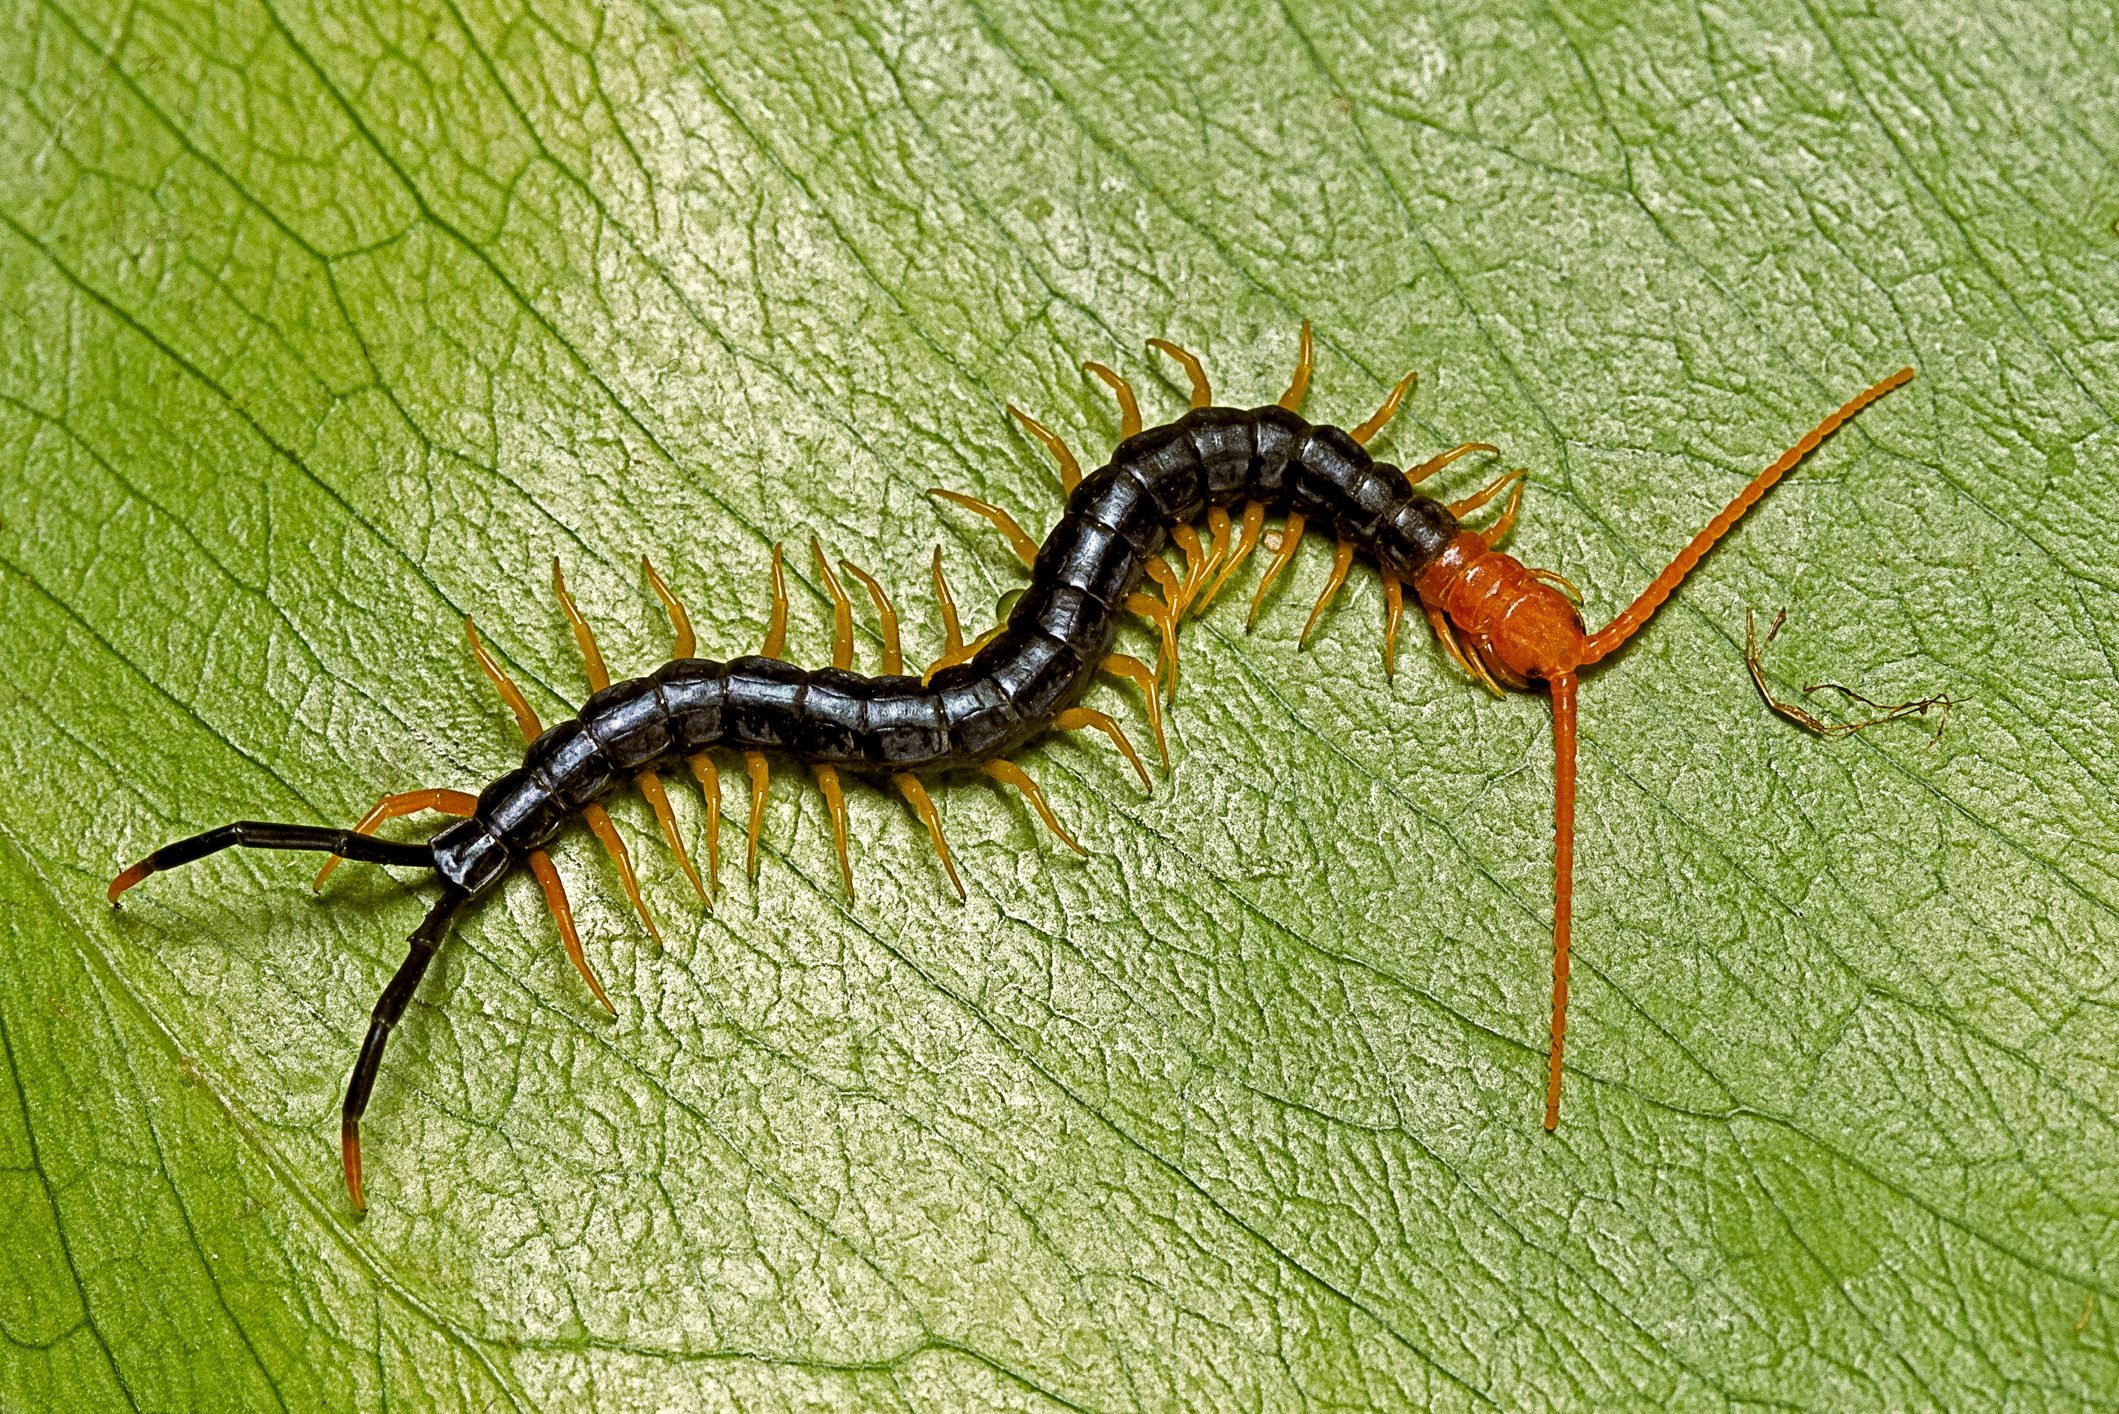 Centipede Prevention Tips